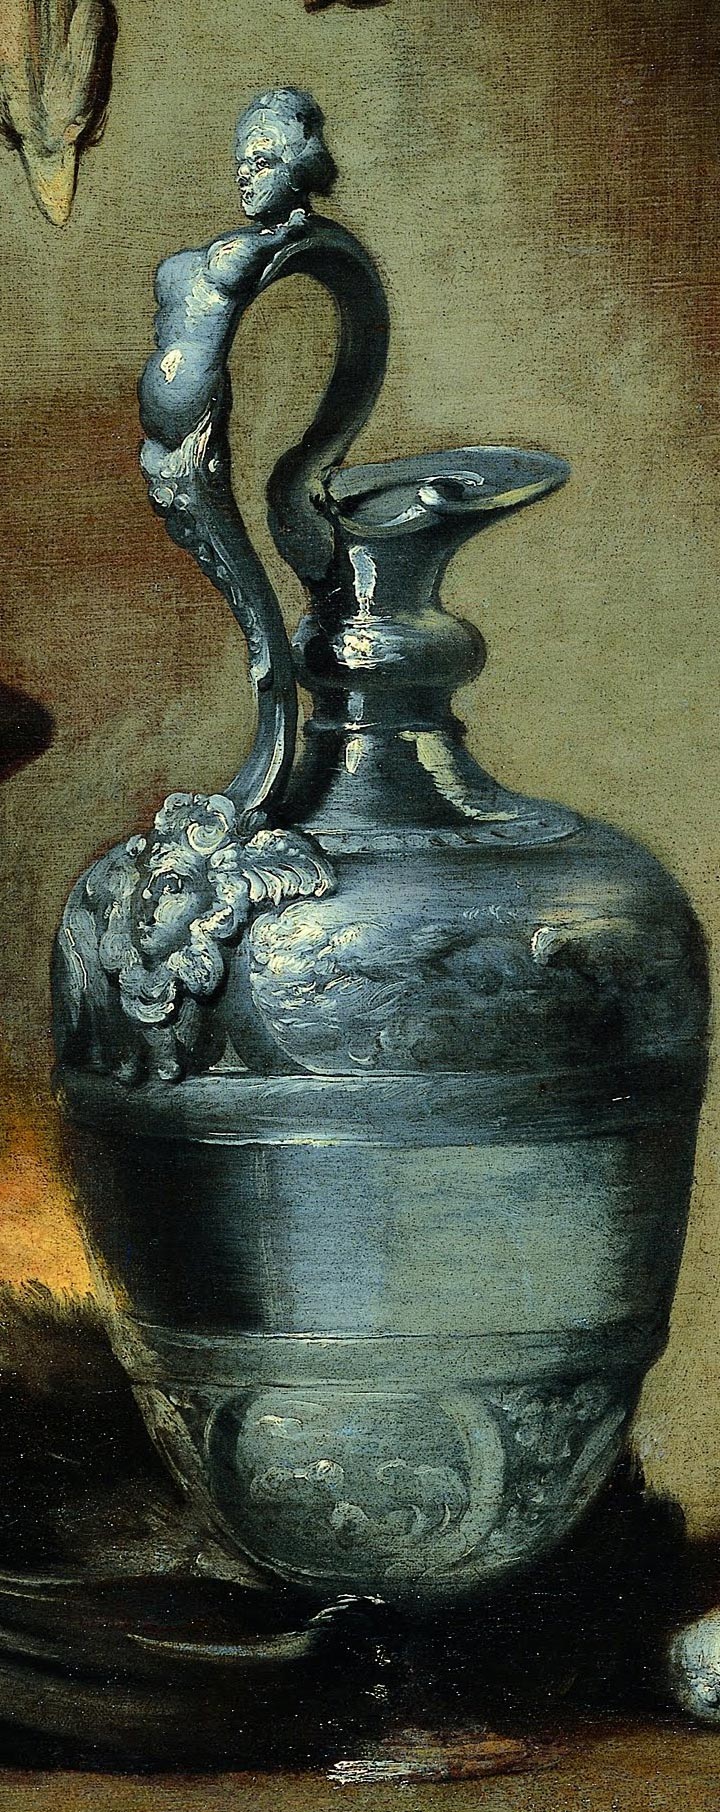 Bernardo Strozzi, The Cook, detail of the tinker